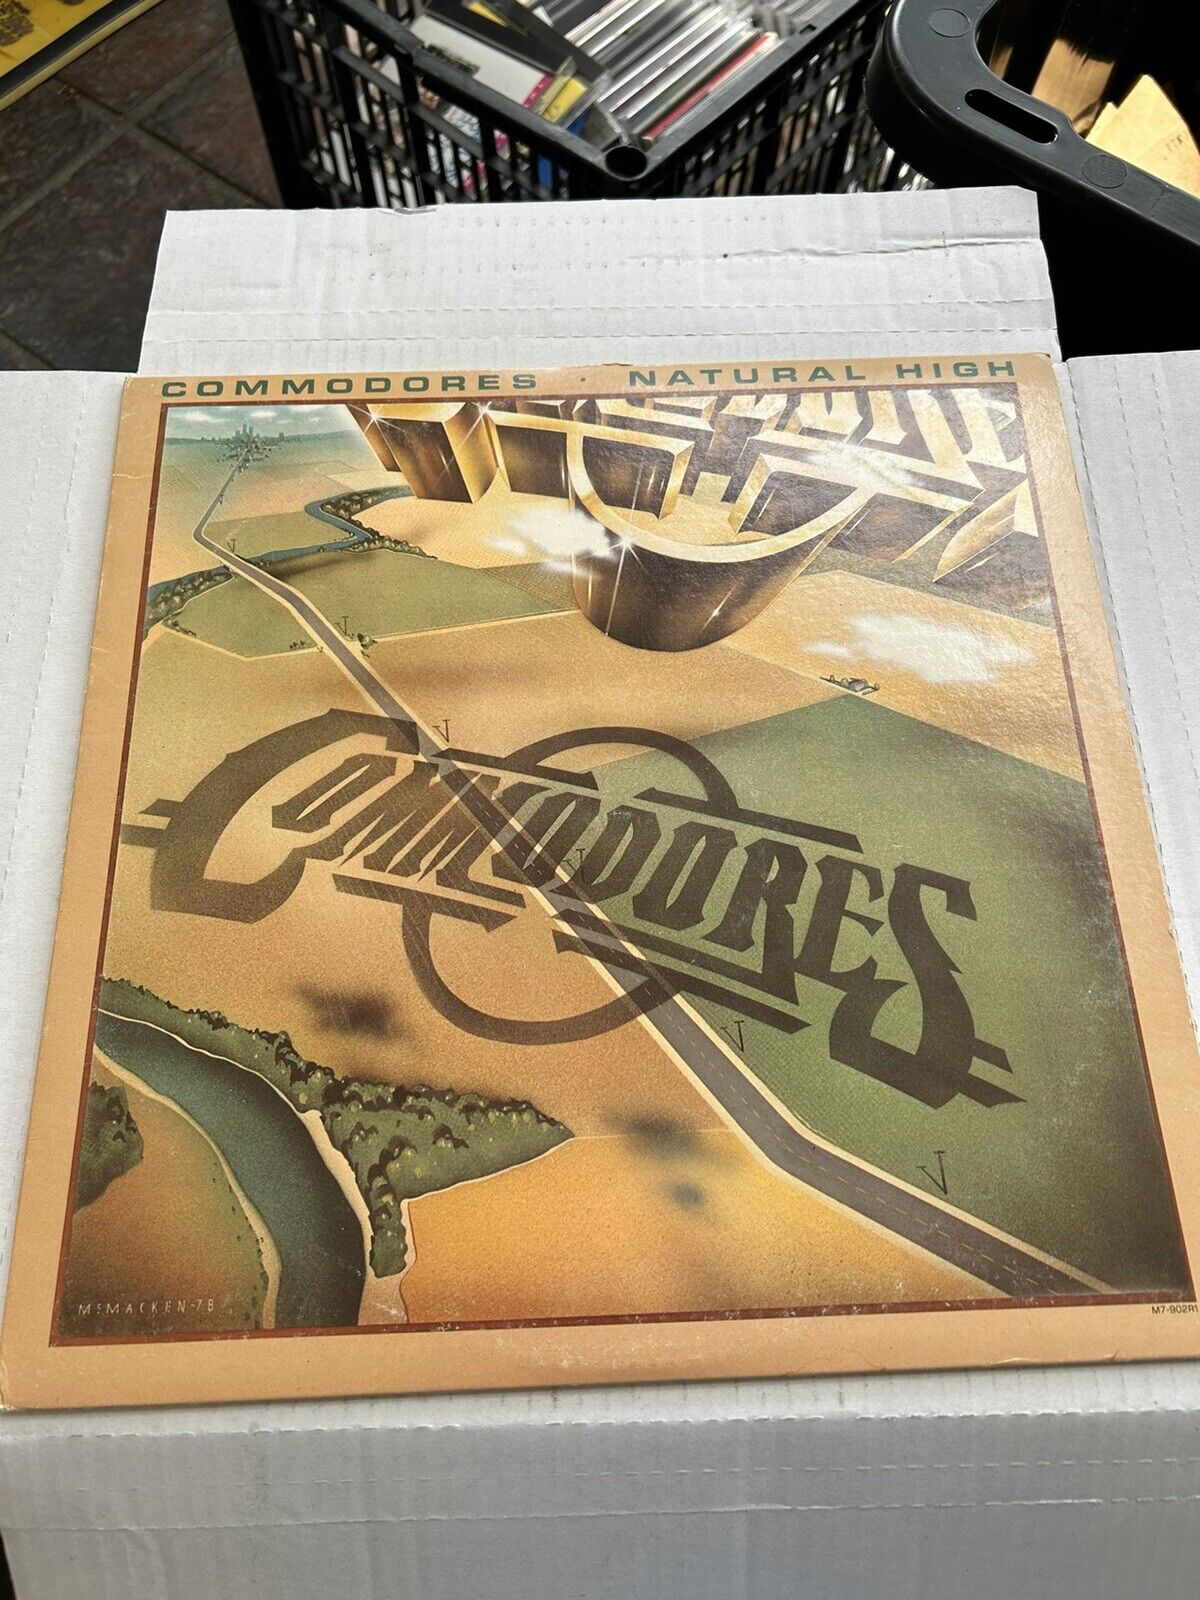 Commodores Natural High Vinyl LP